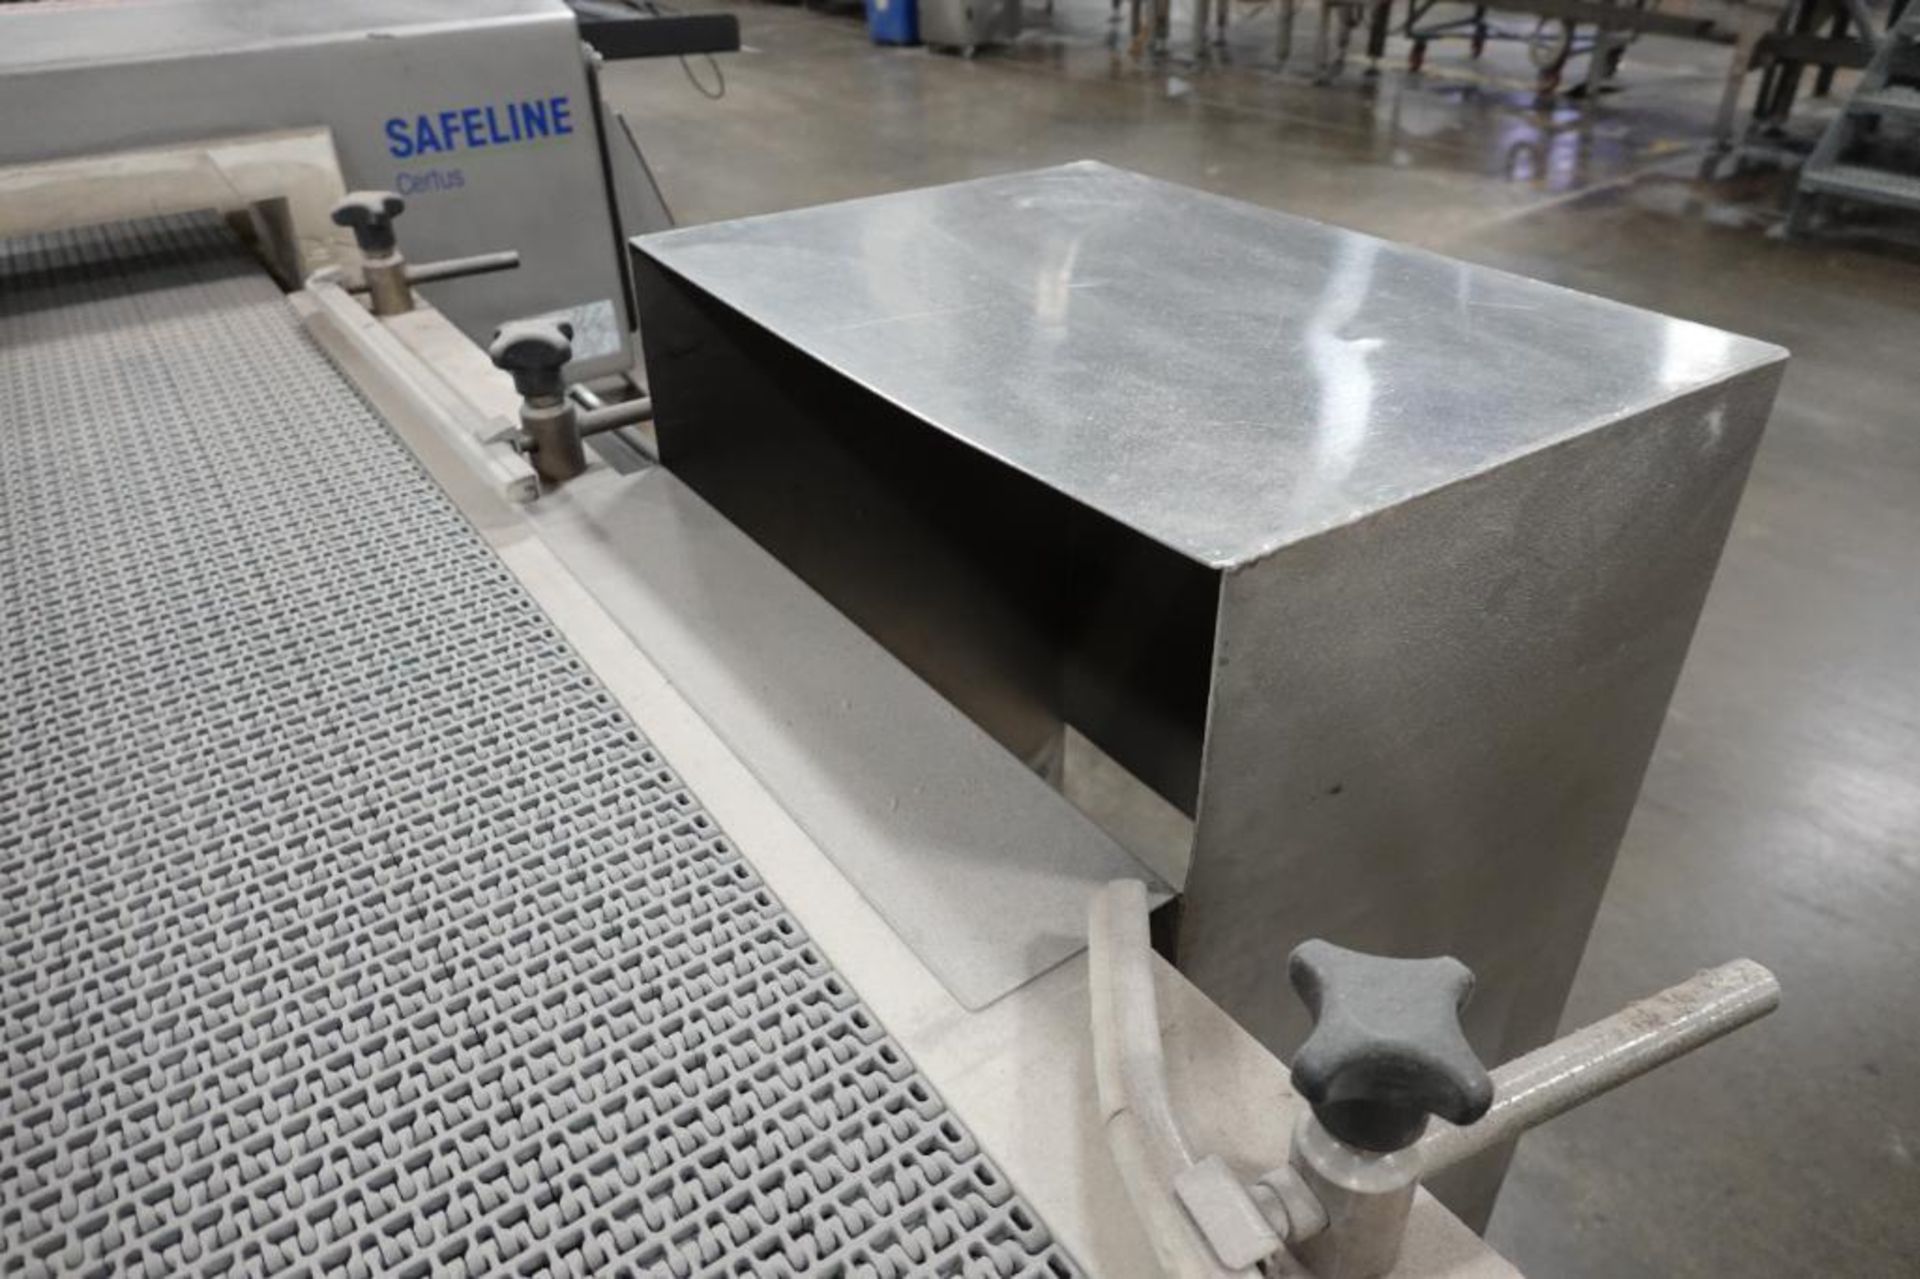 2010 Safeline Certus metal detector with conveyor - Image 6 of 11